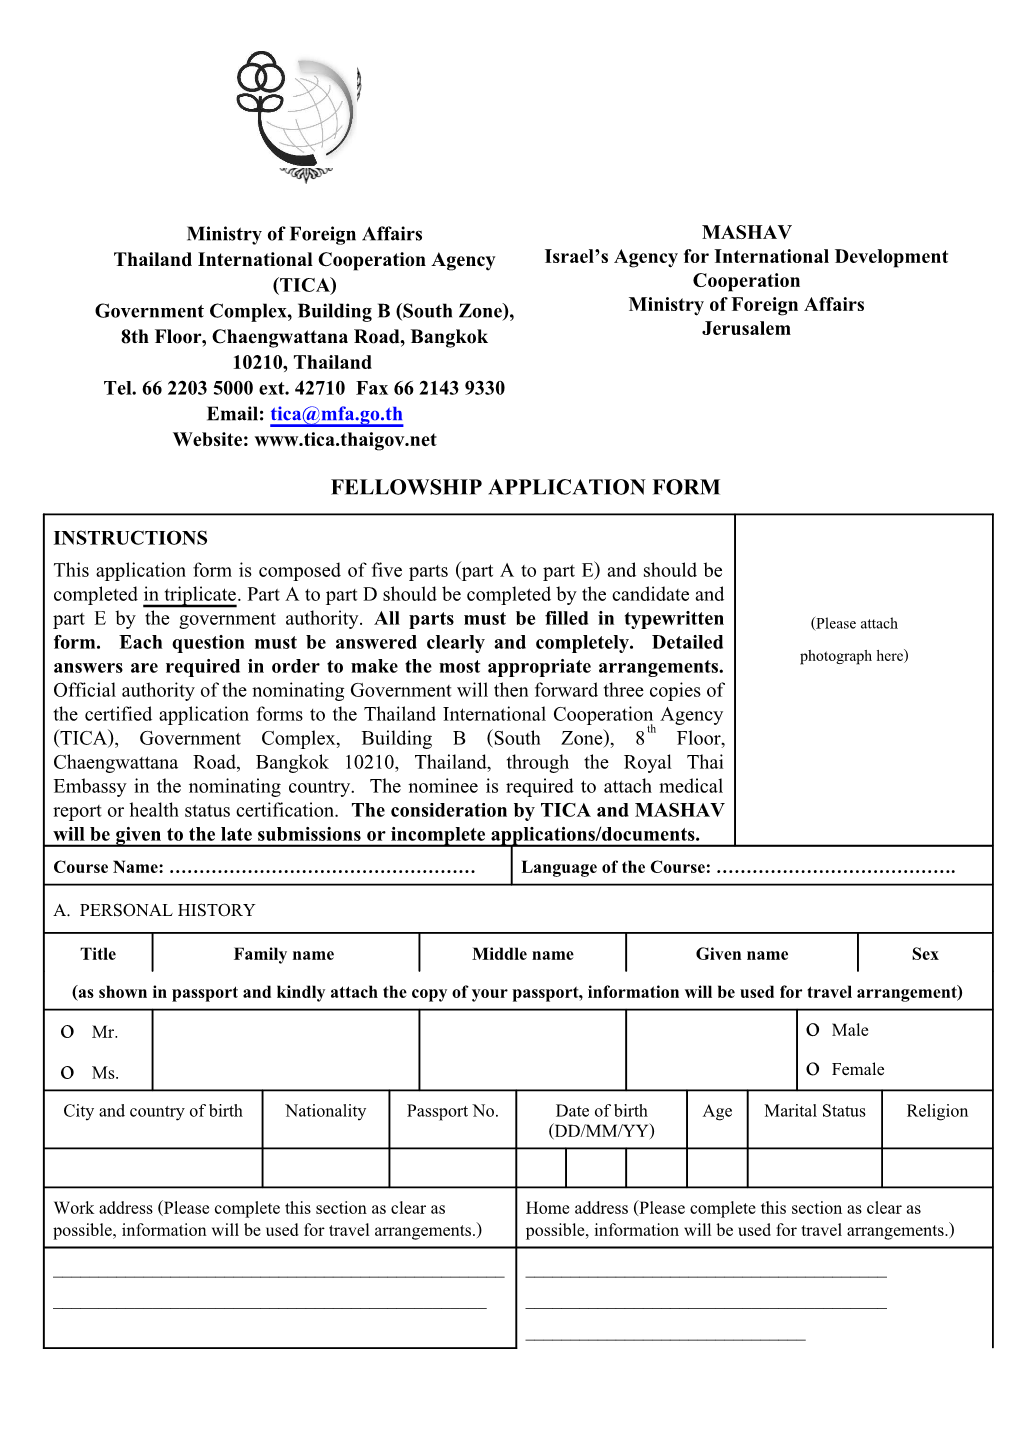 Fellowship Application Form s1